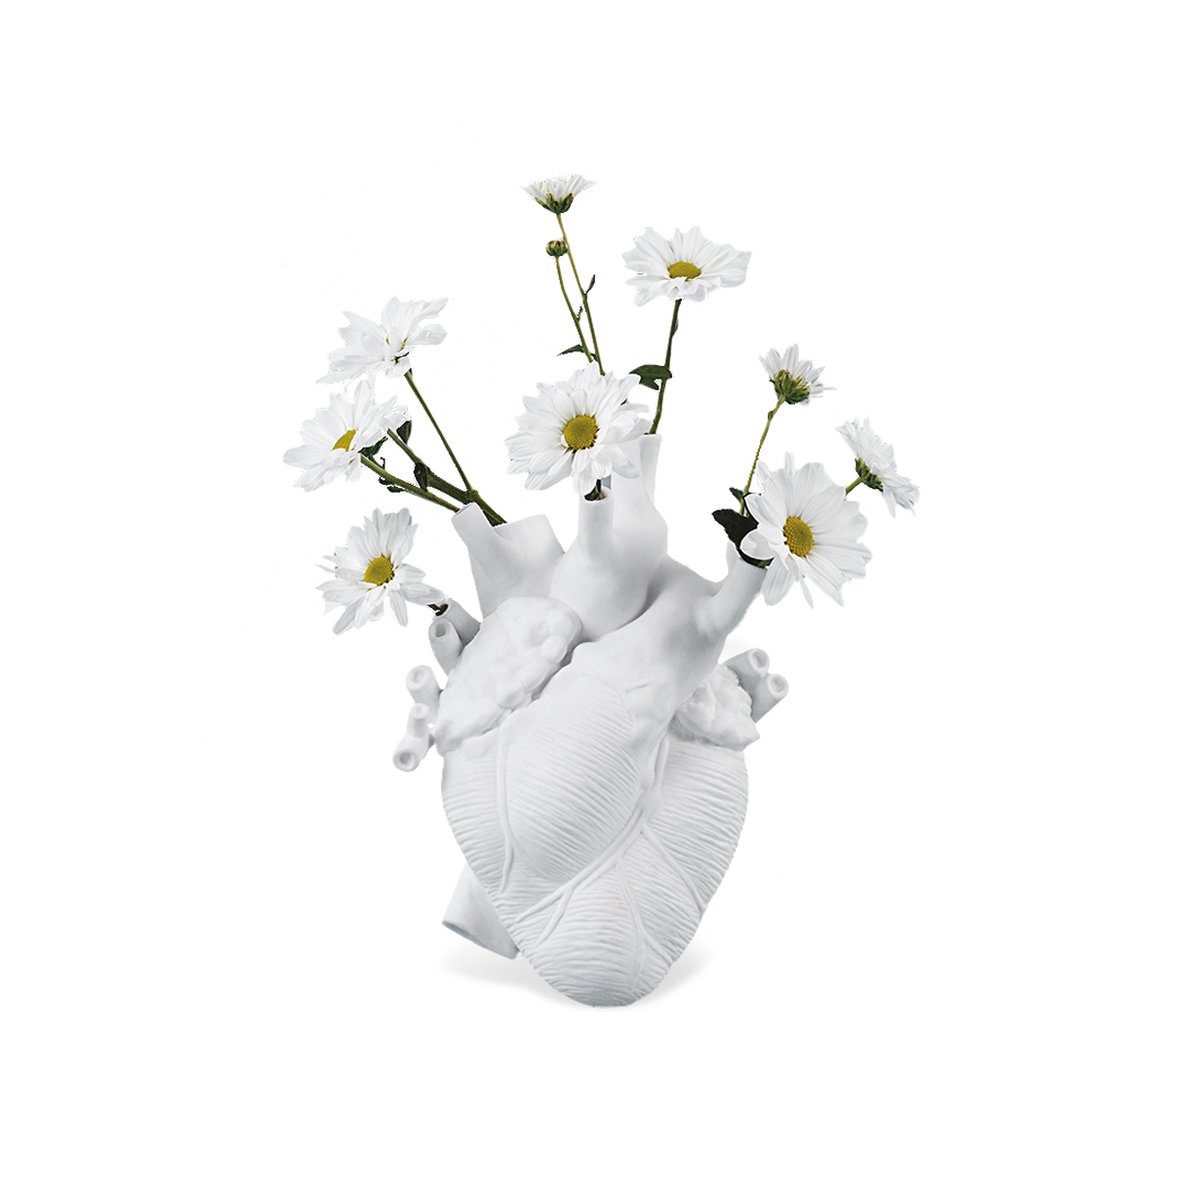 Love in Bloom vase by Seletti